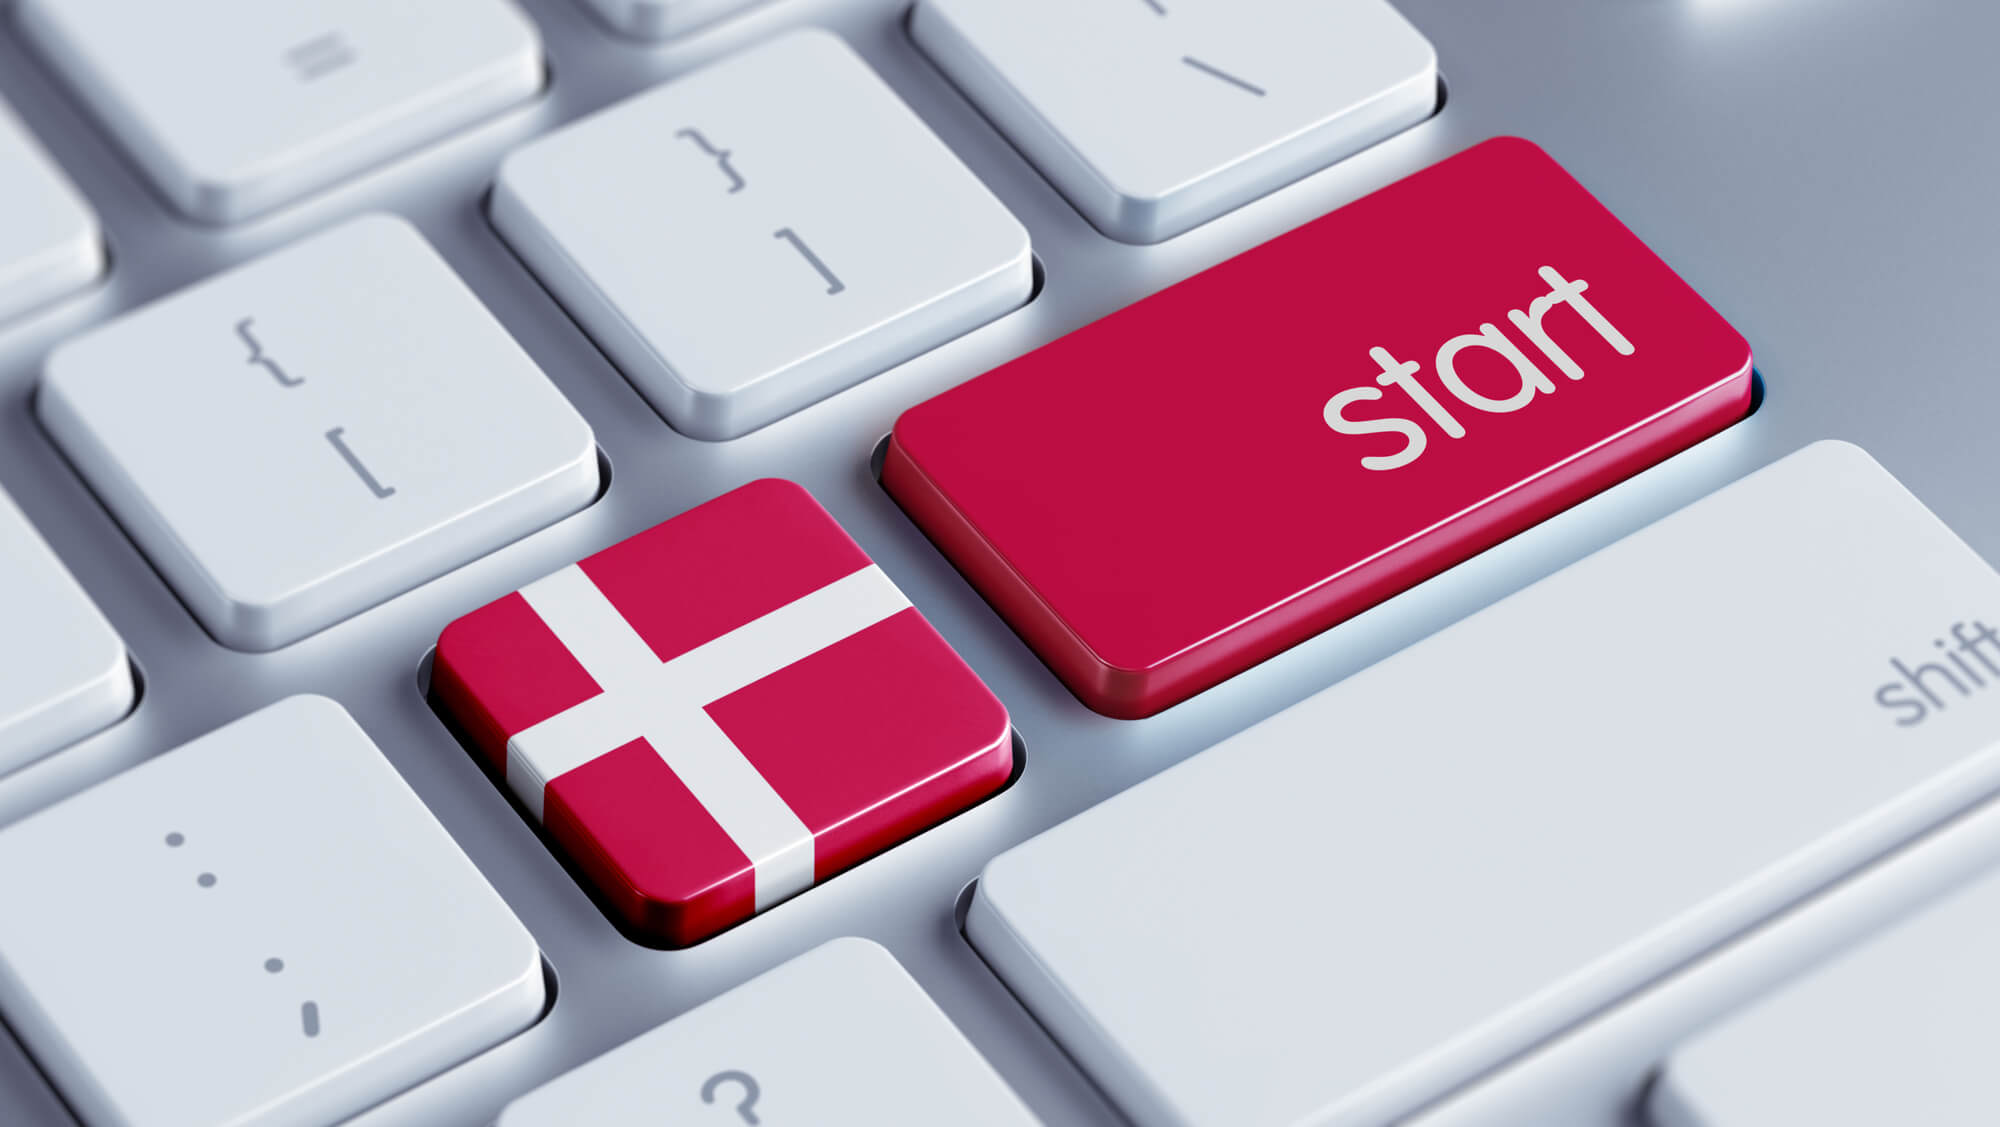 Starting a Business in Denmark